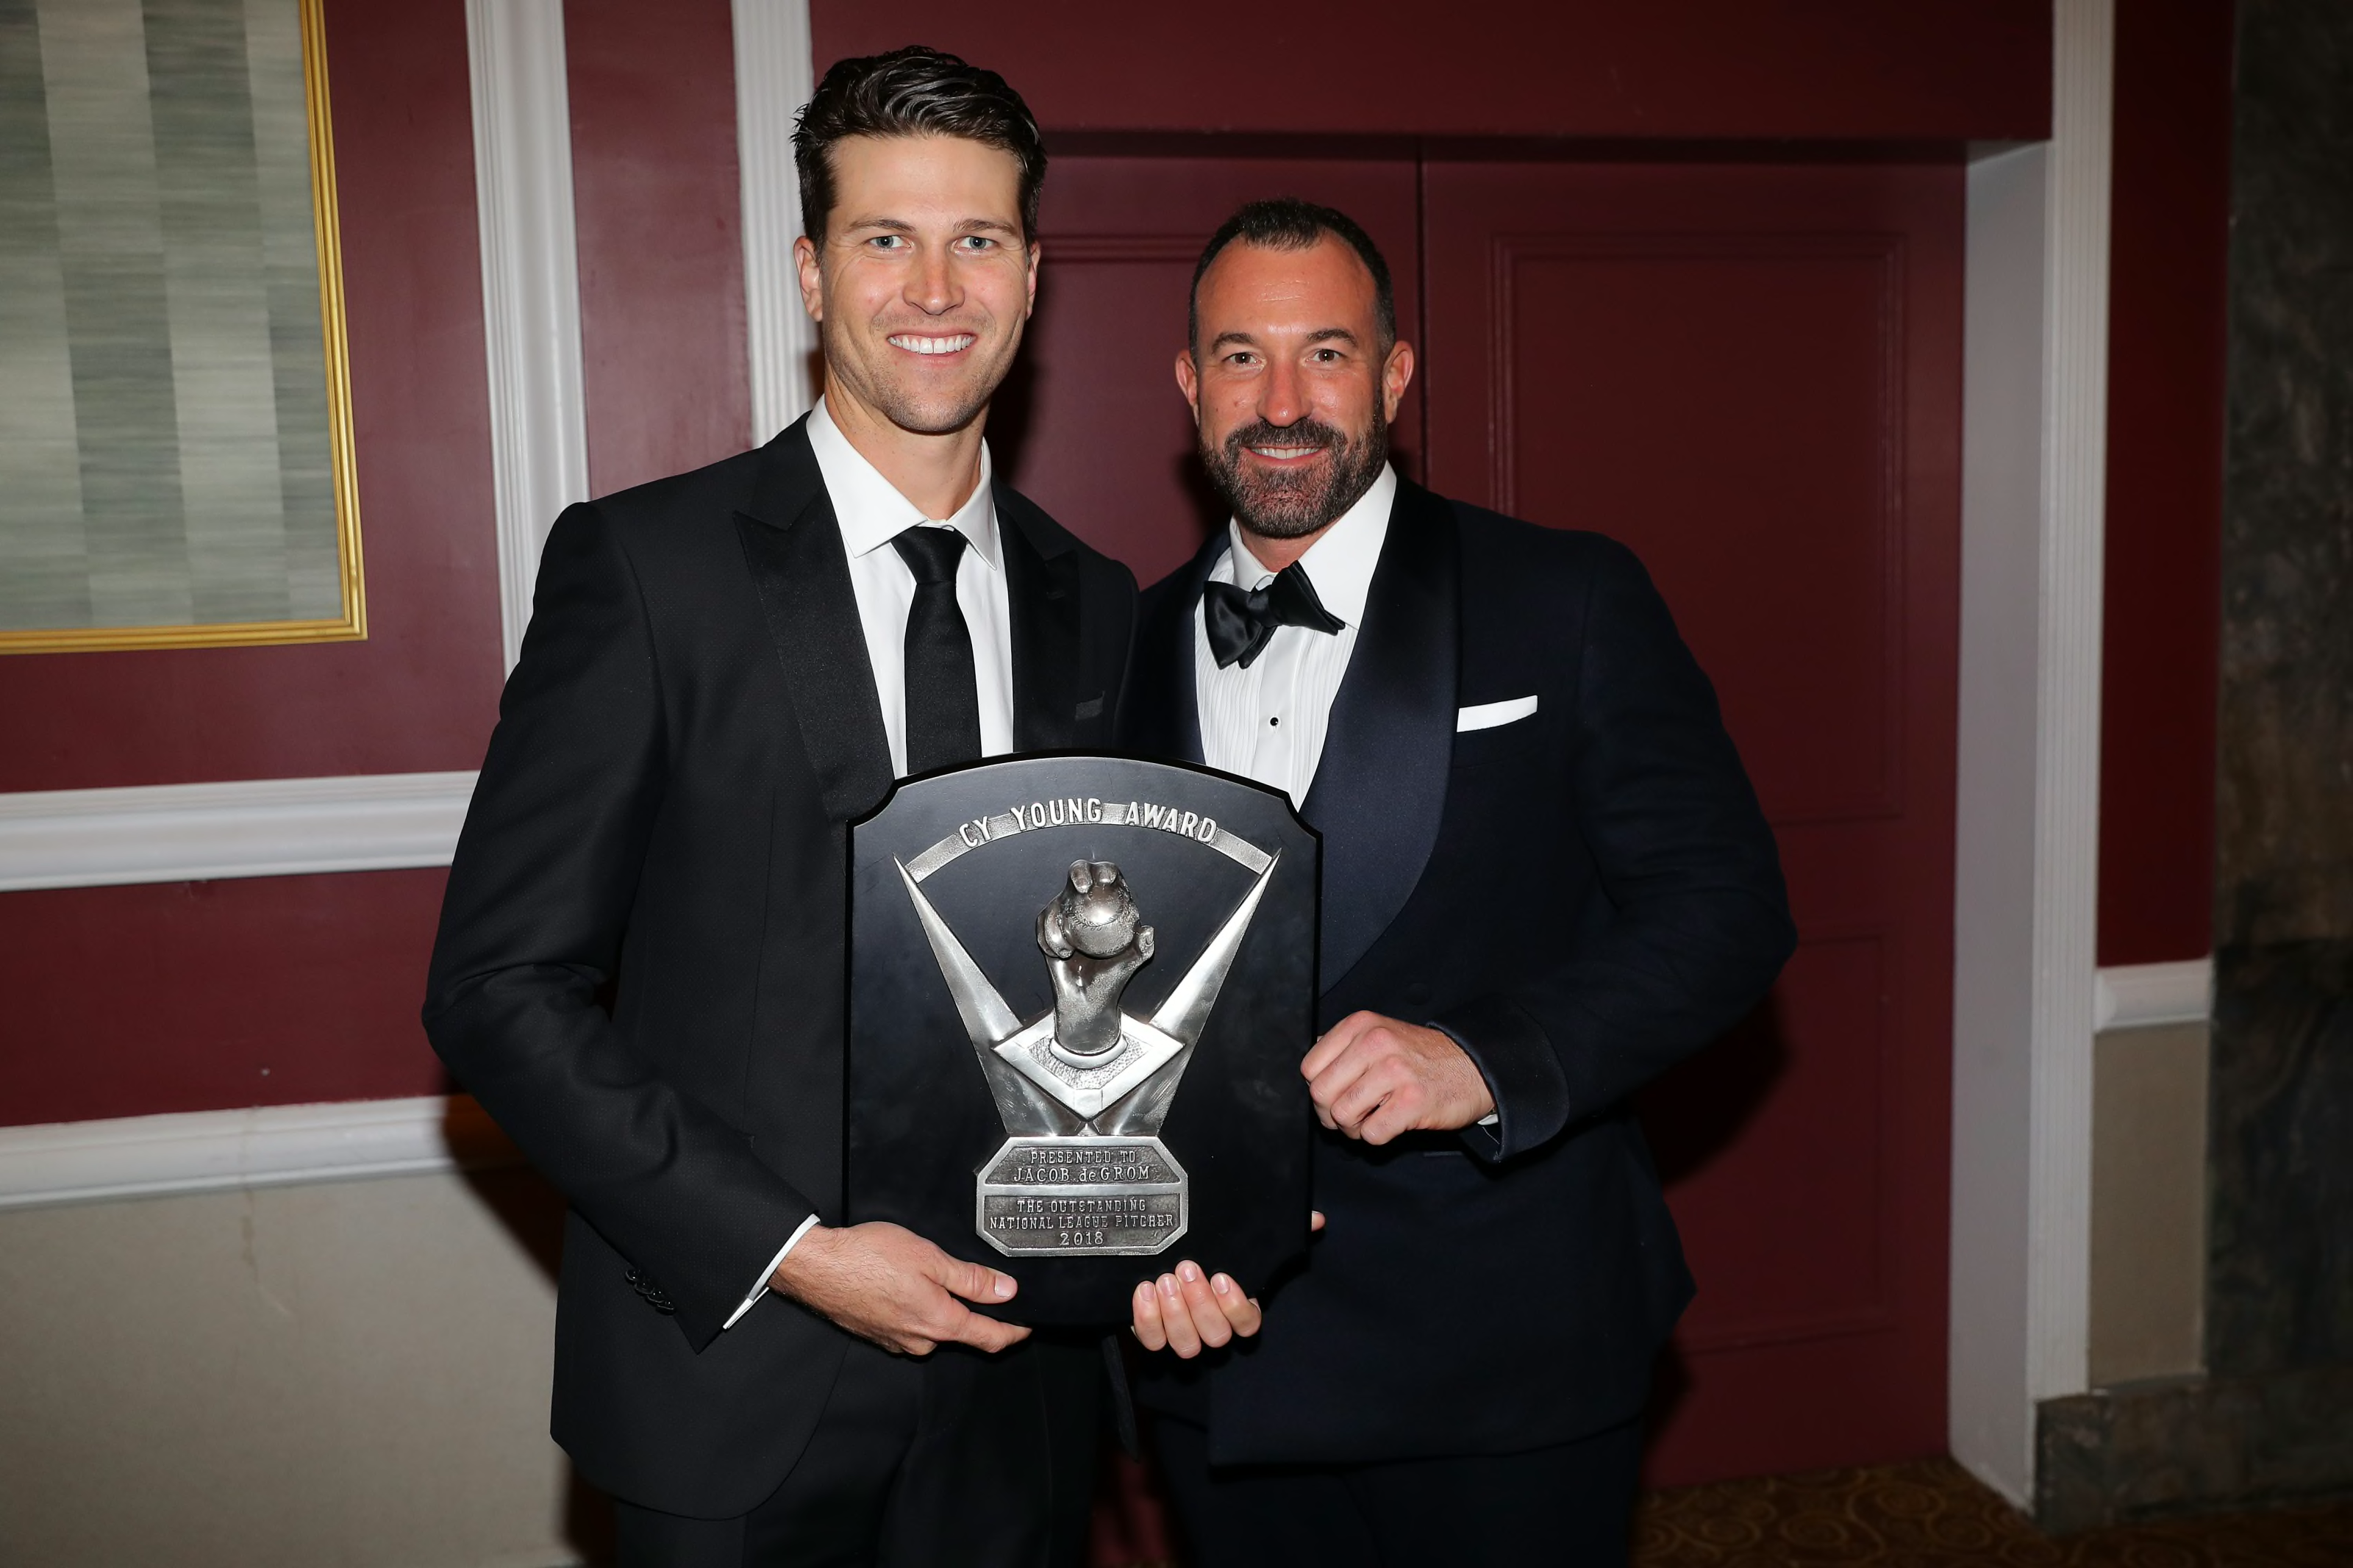 Mets News: Jacob deGrom wins Cy Young Award - Amazin' Avenue